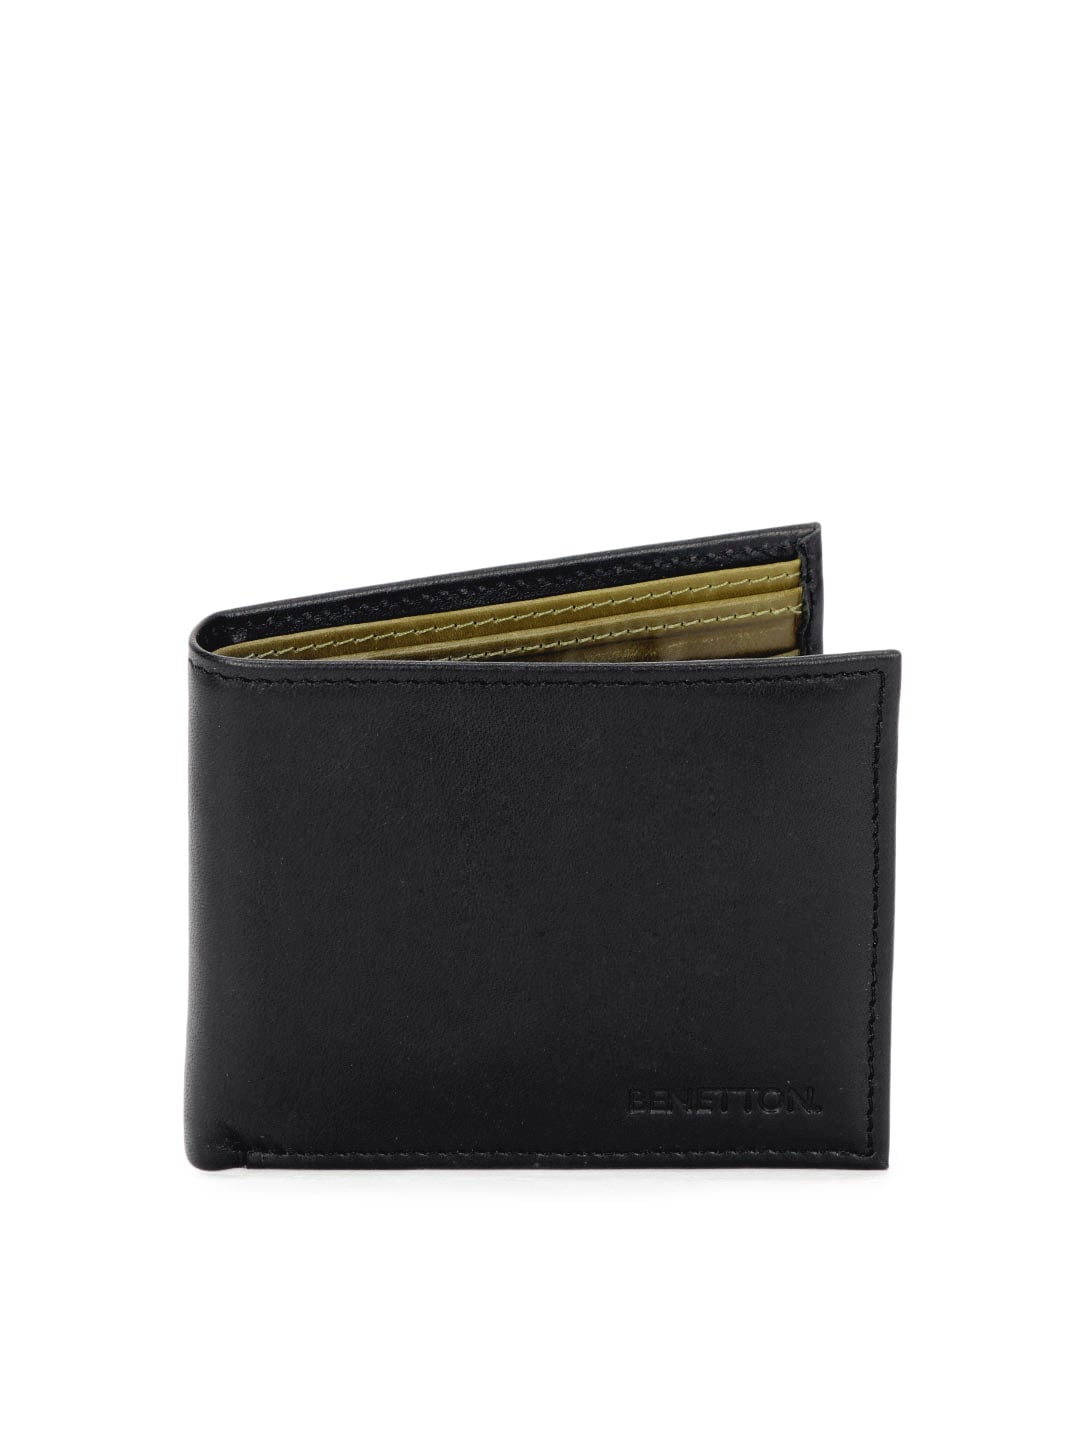 United Colors of Benetton Men Leather Black Wallet